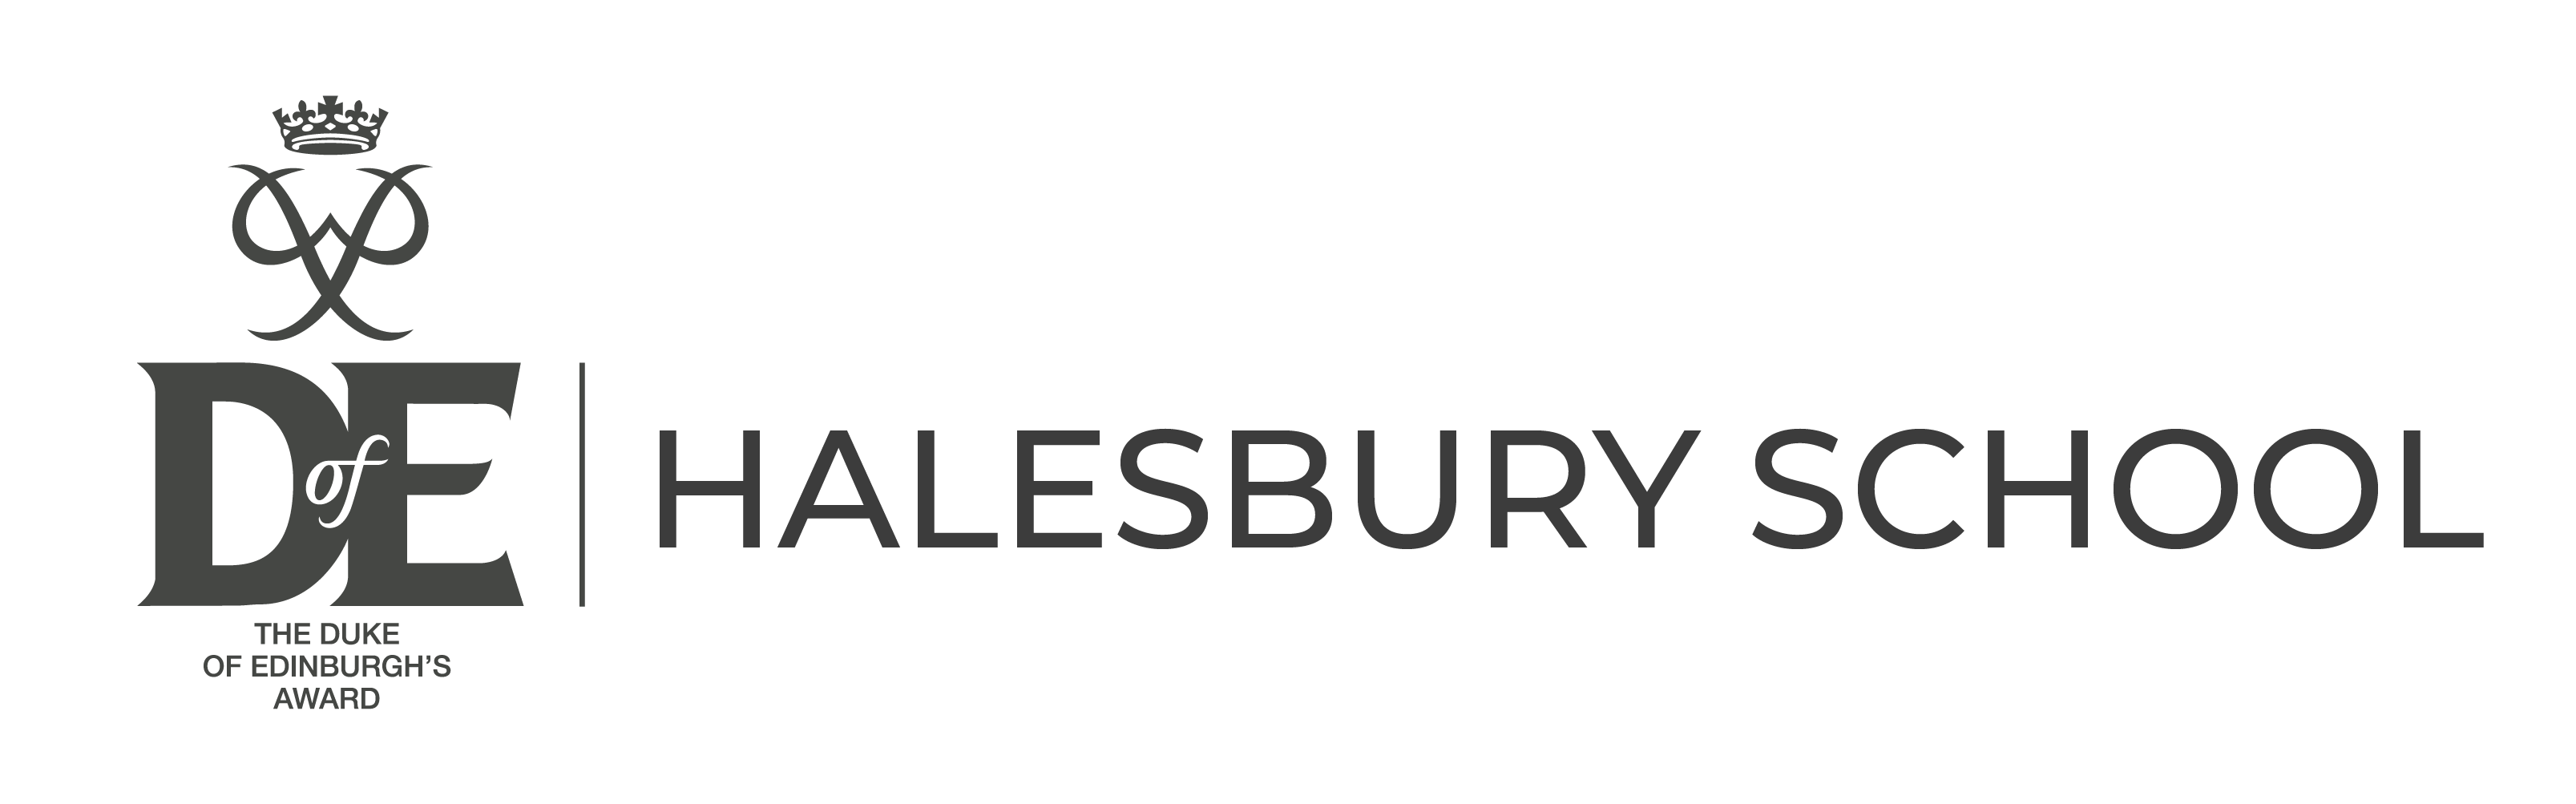 Dof E Halesbury School Logo